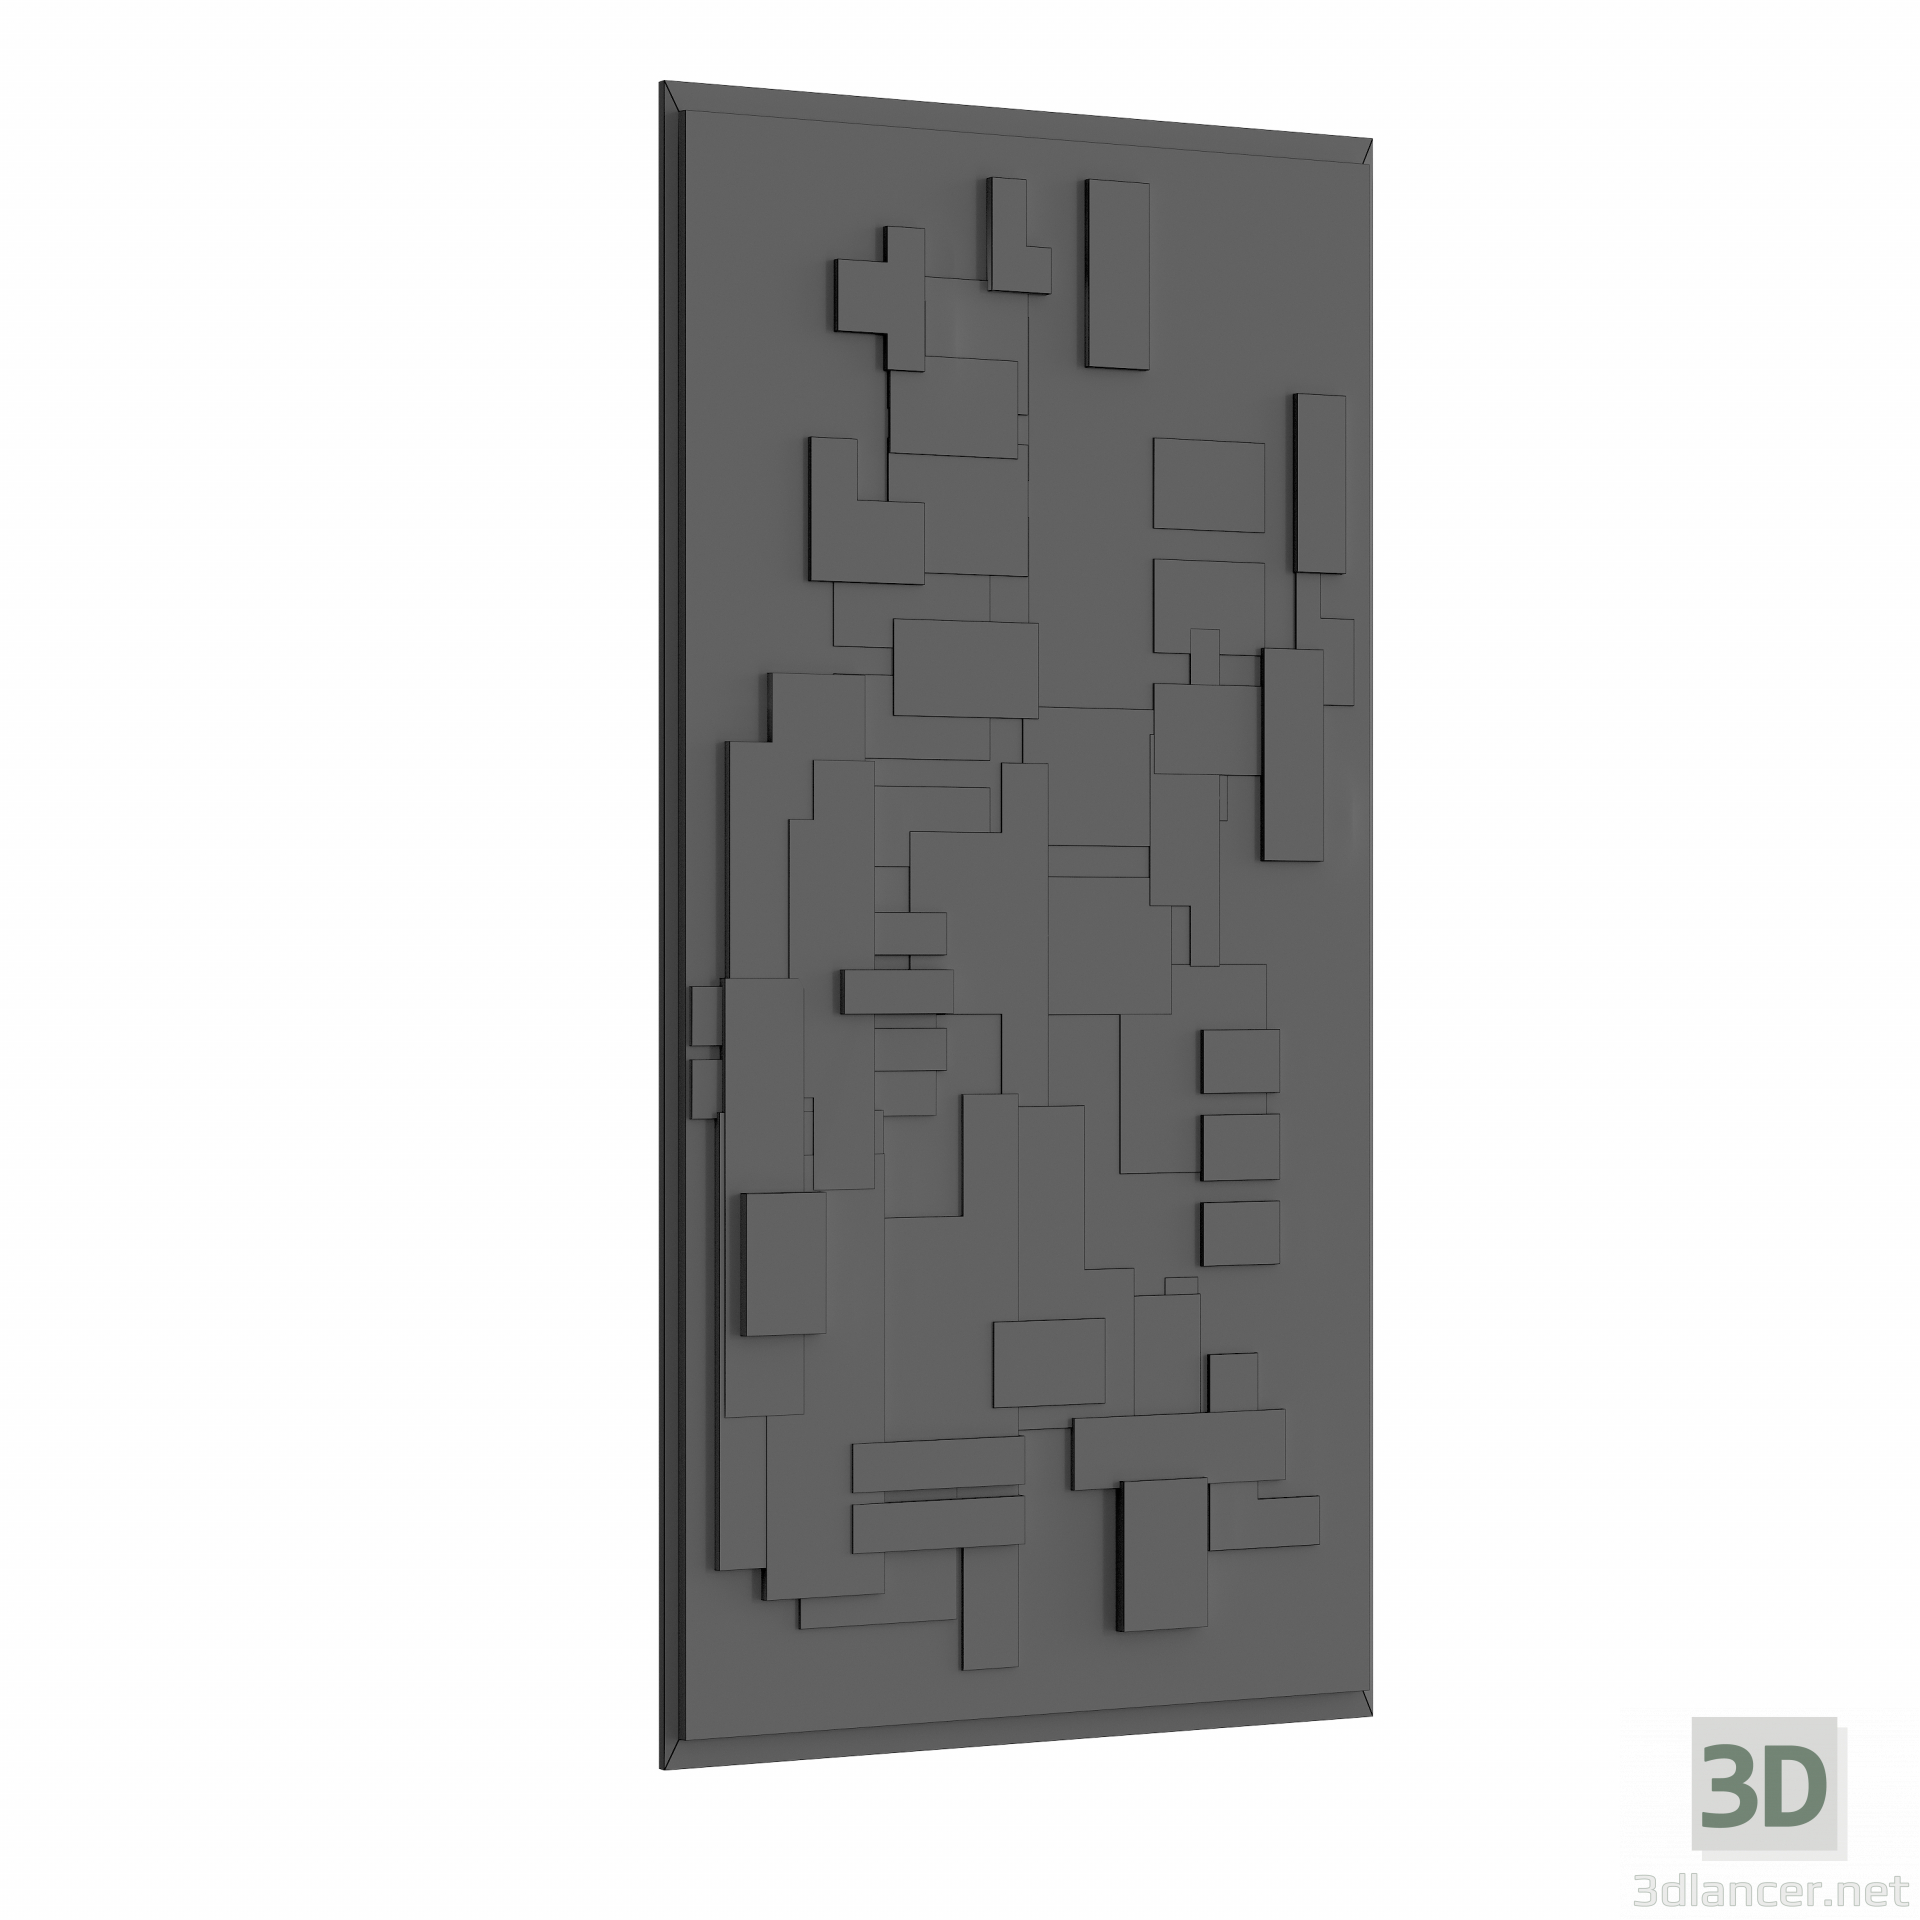 dekoratives Wandpaneel 3D-Modell kaufen - Rendern